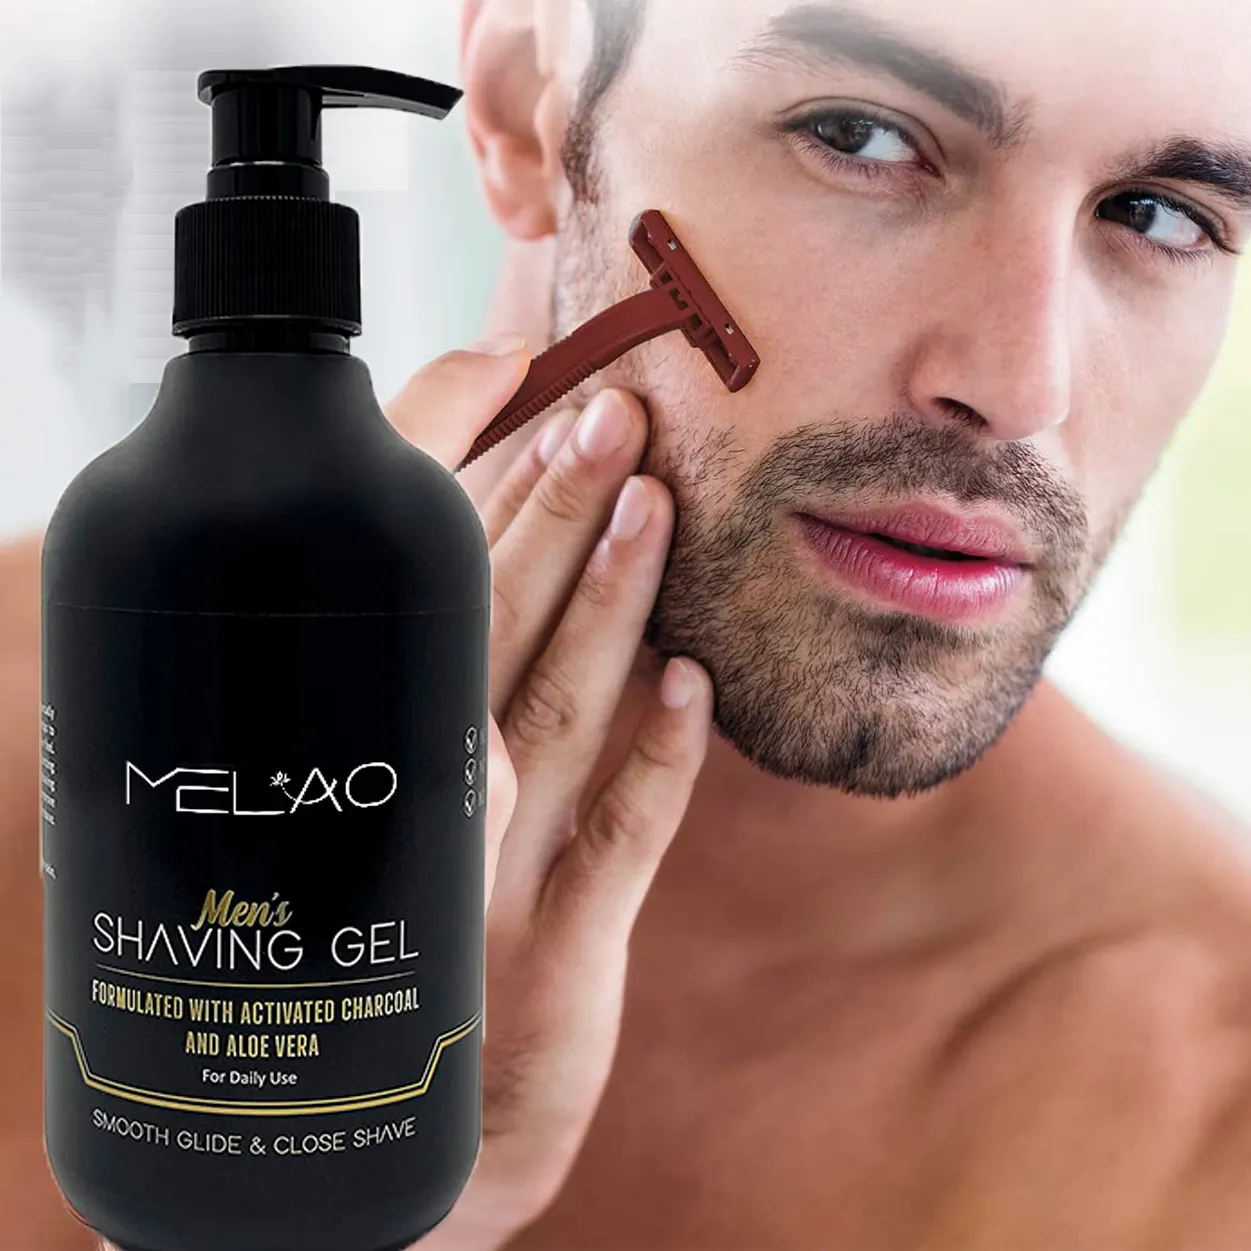 MELAO Private Label Organic Reduce Irritation Sensitive Skin Shave Gel Cream For Men